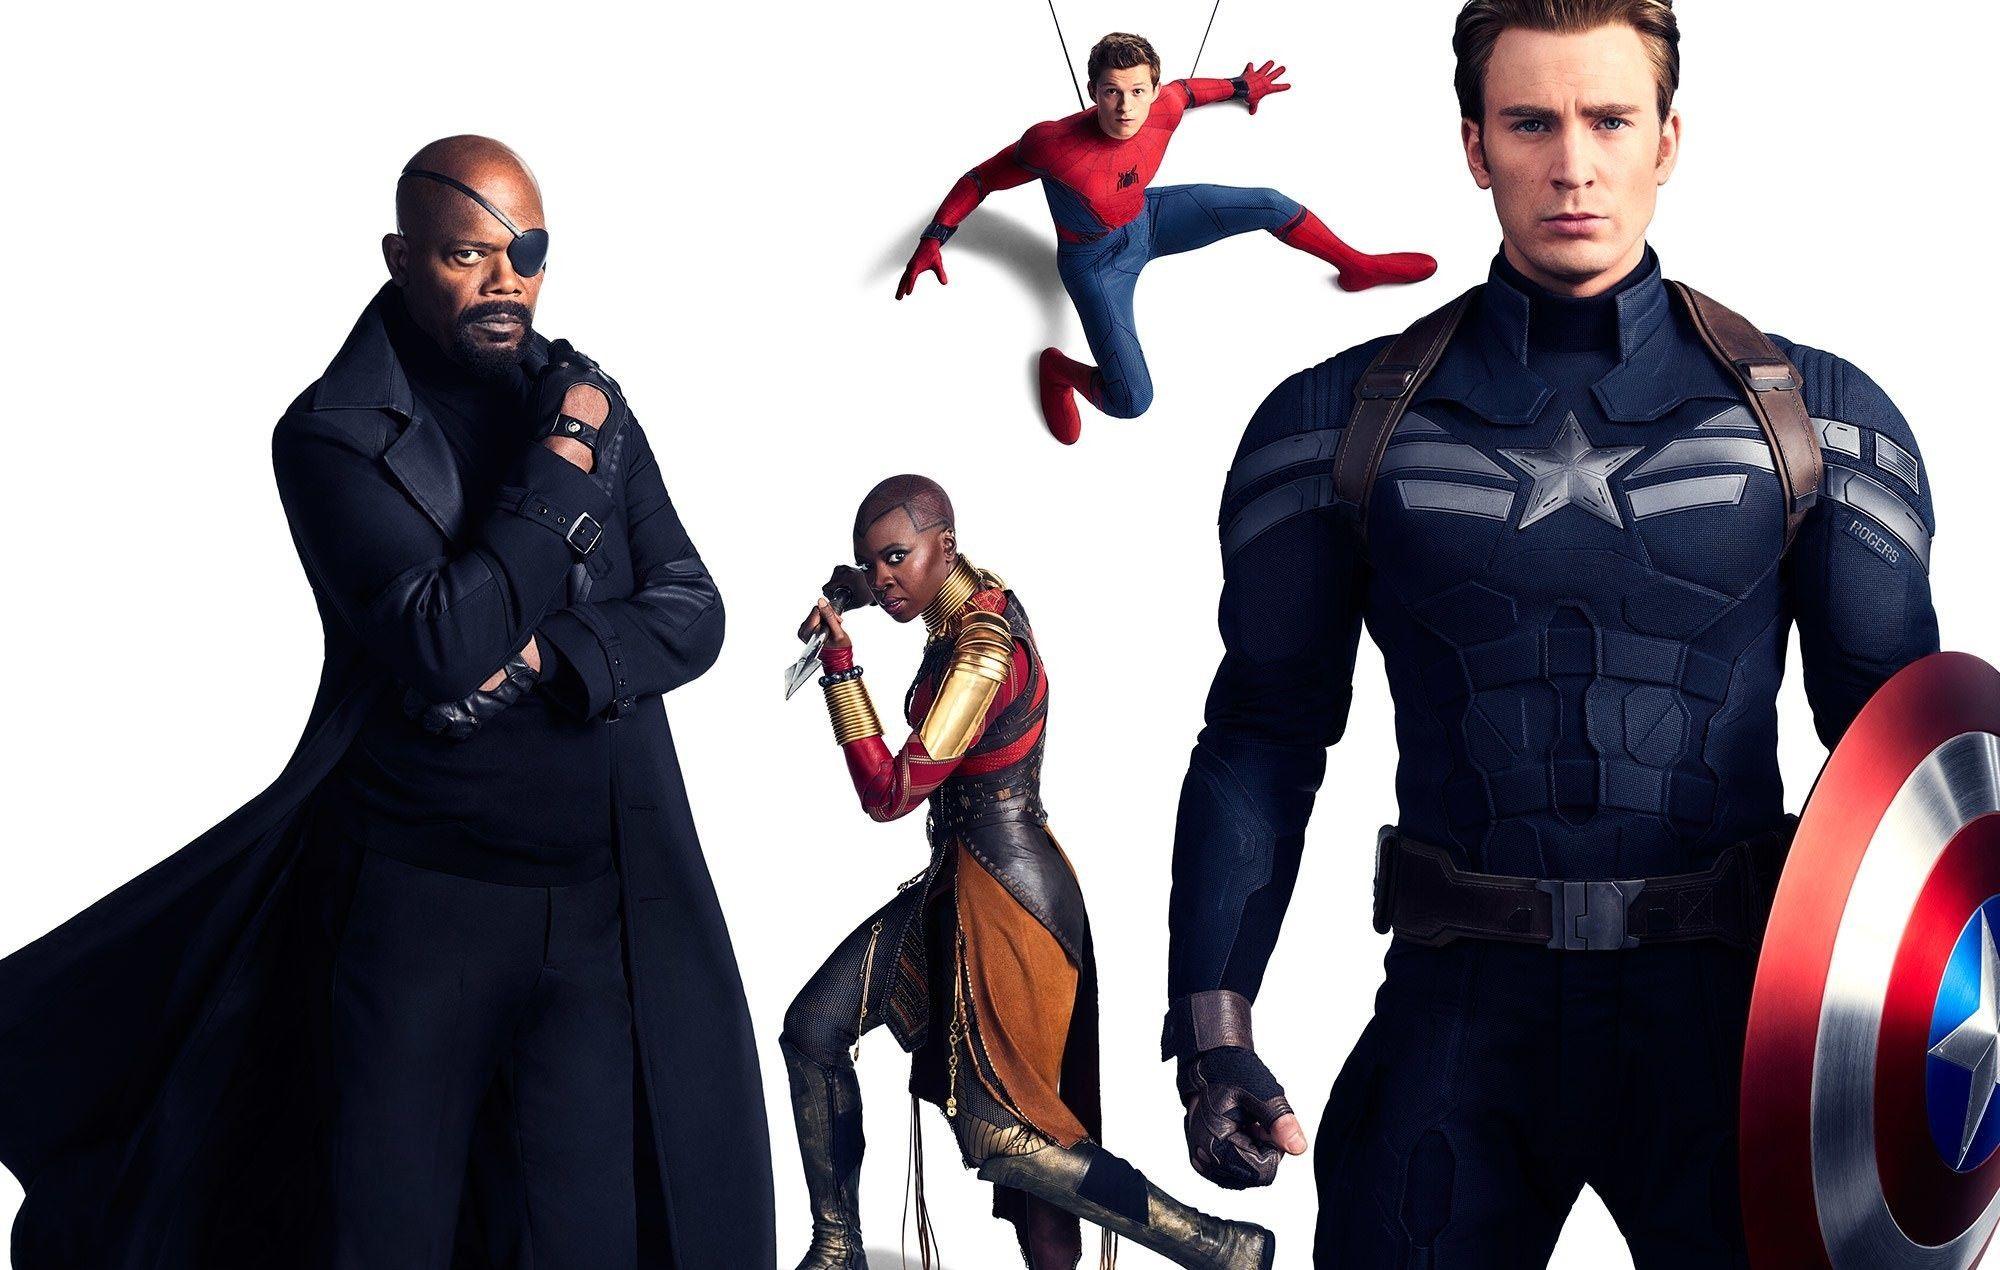 Avengers: Infinity War Full HD Wallpaper